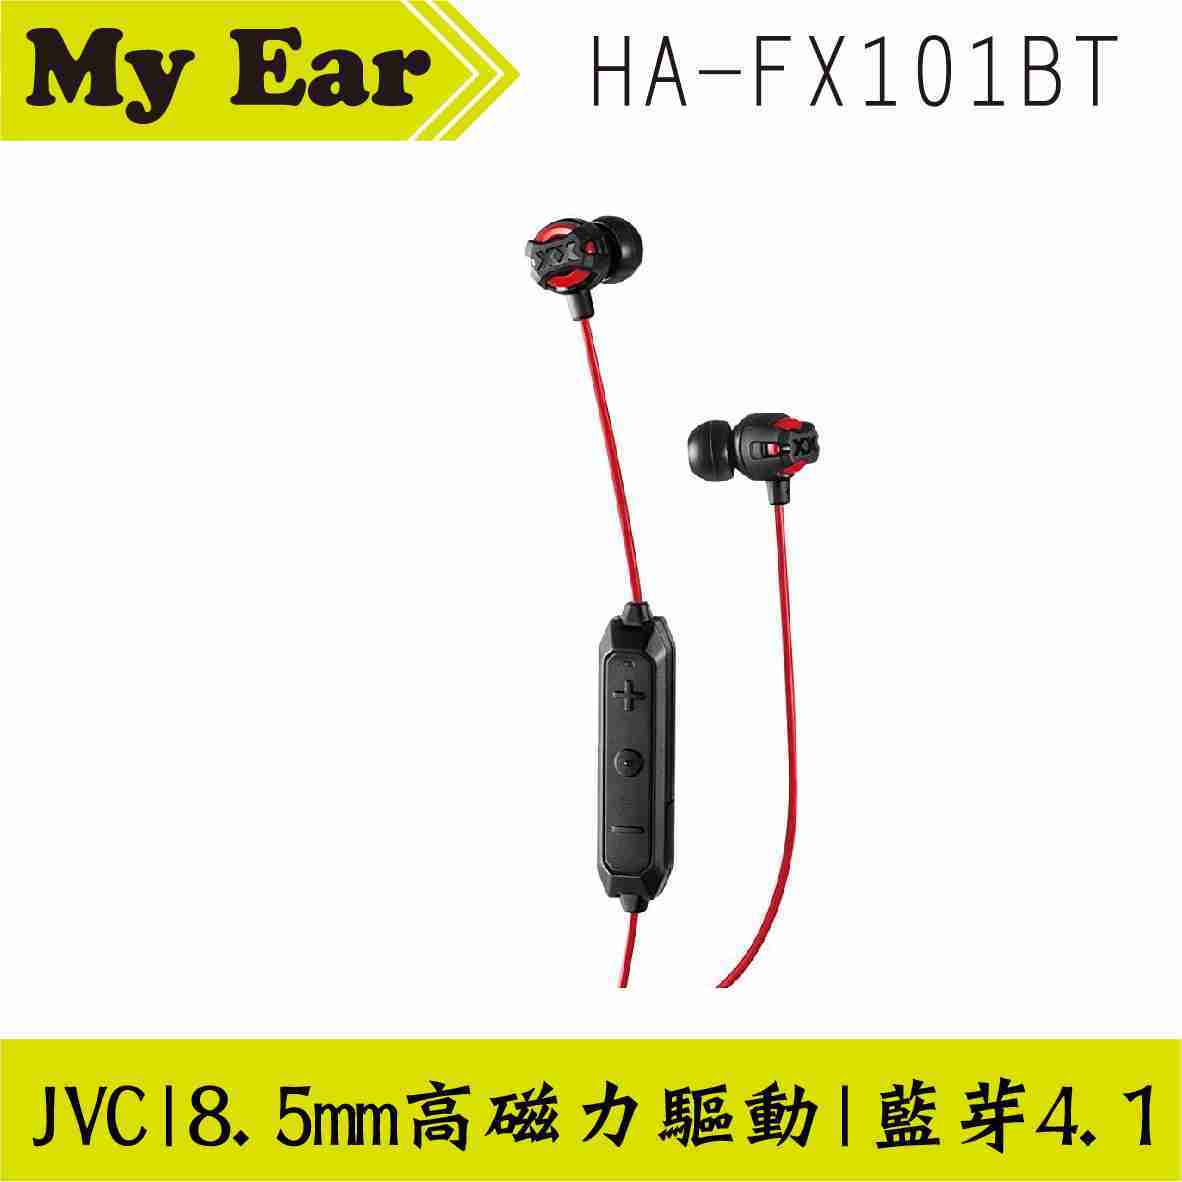 JVC HA-FX101BT 紅色 支援藍芽4.1 高磁力驅動8.5mm 無線耳機 | My Ear耳機專門店